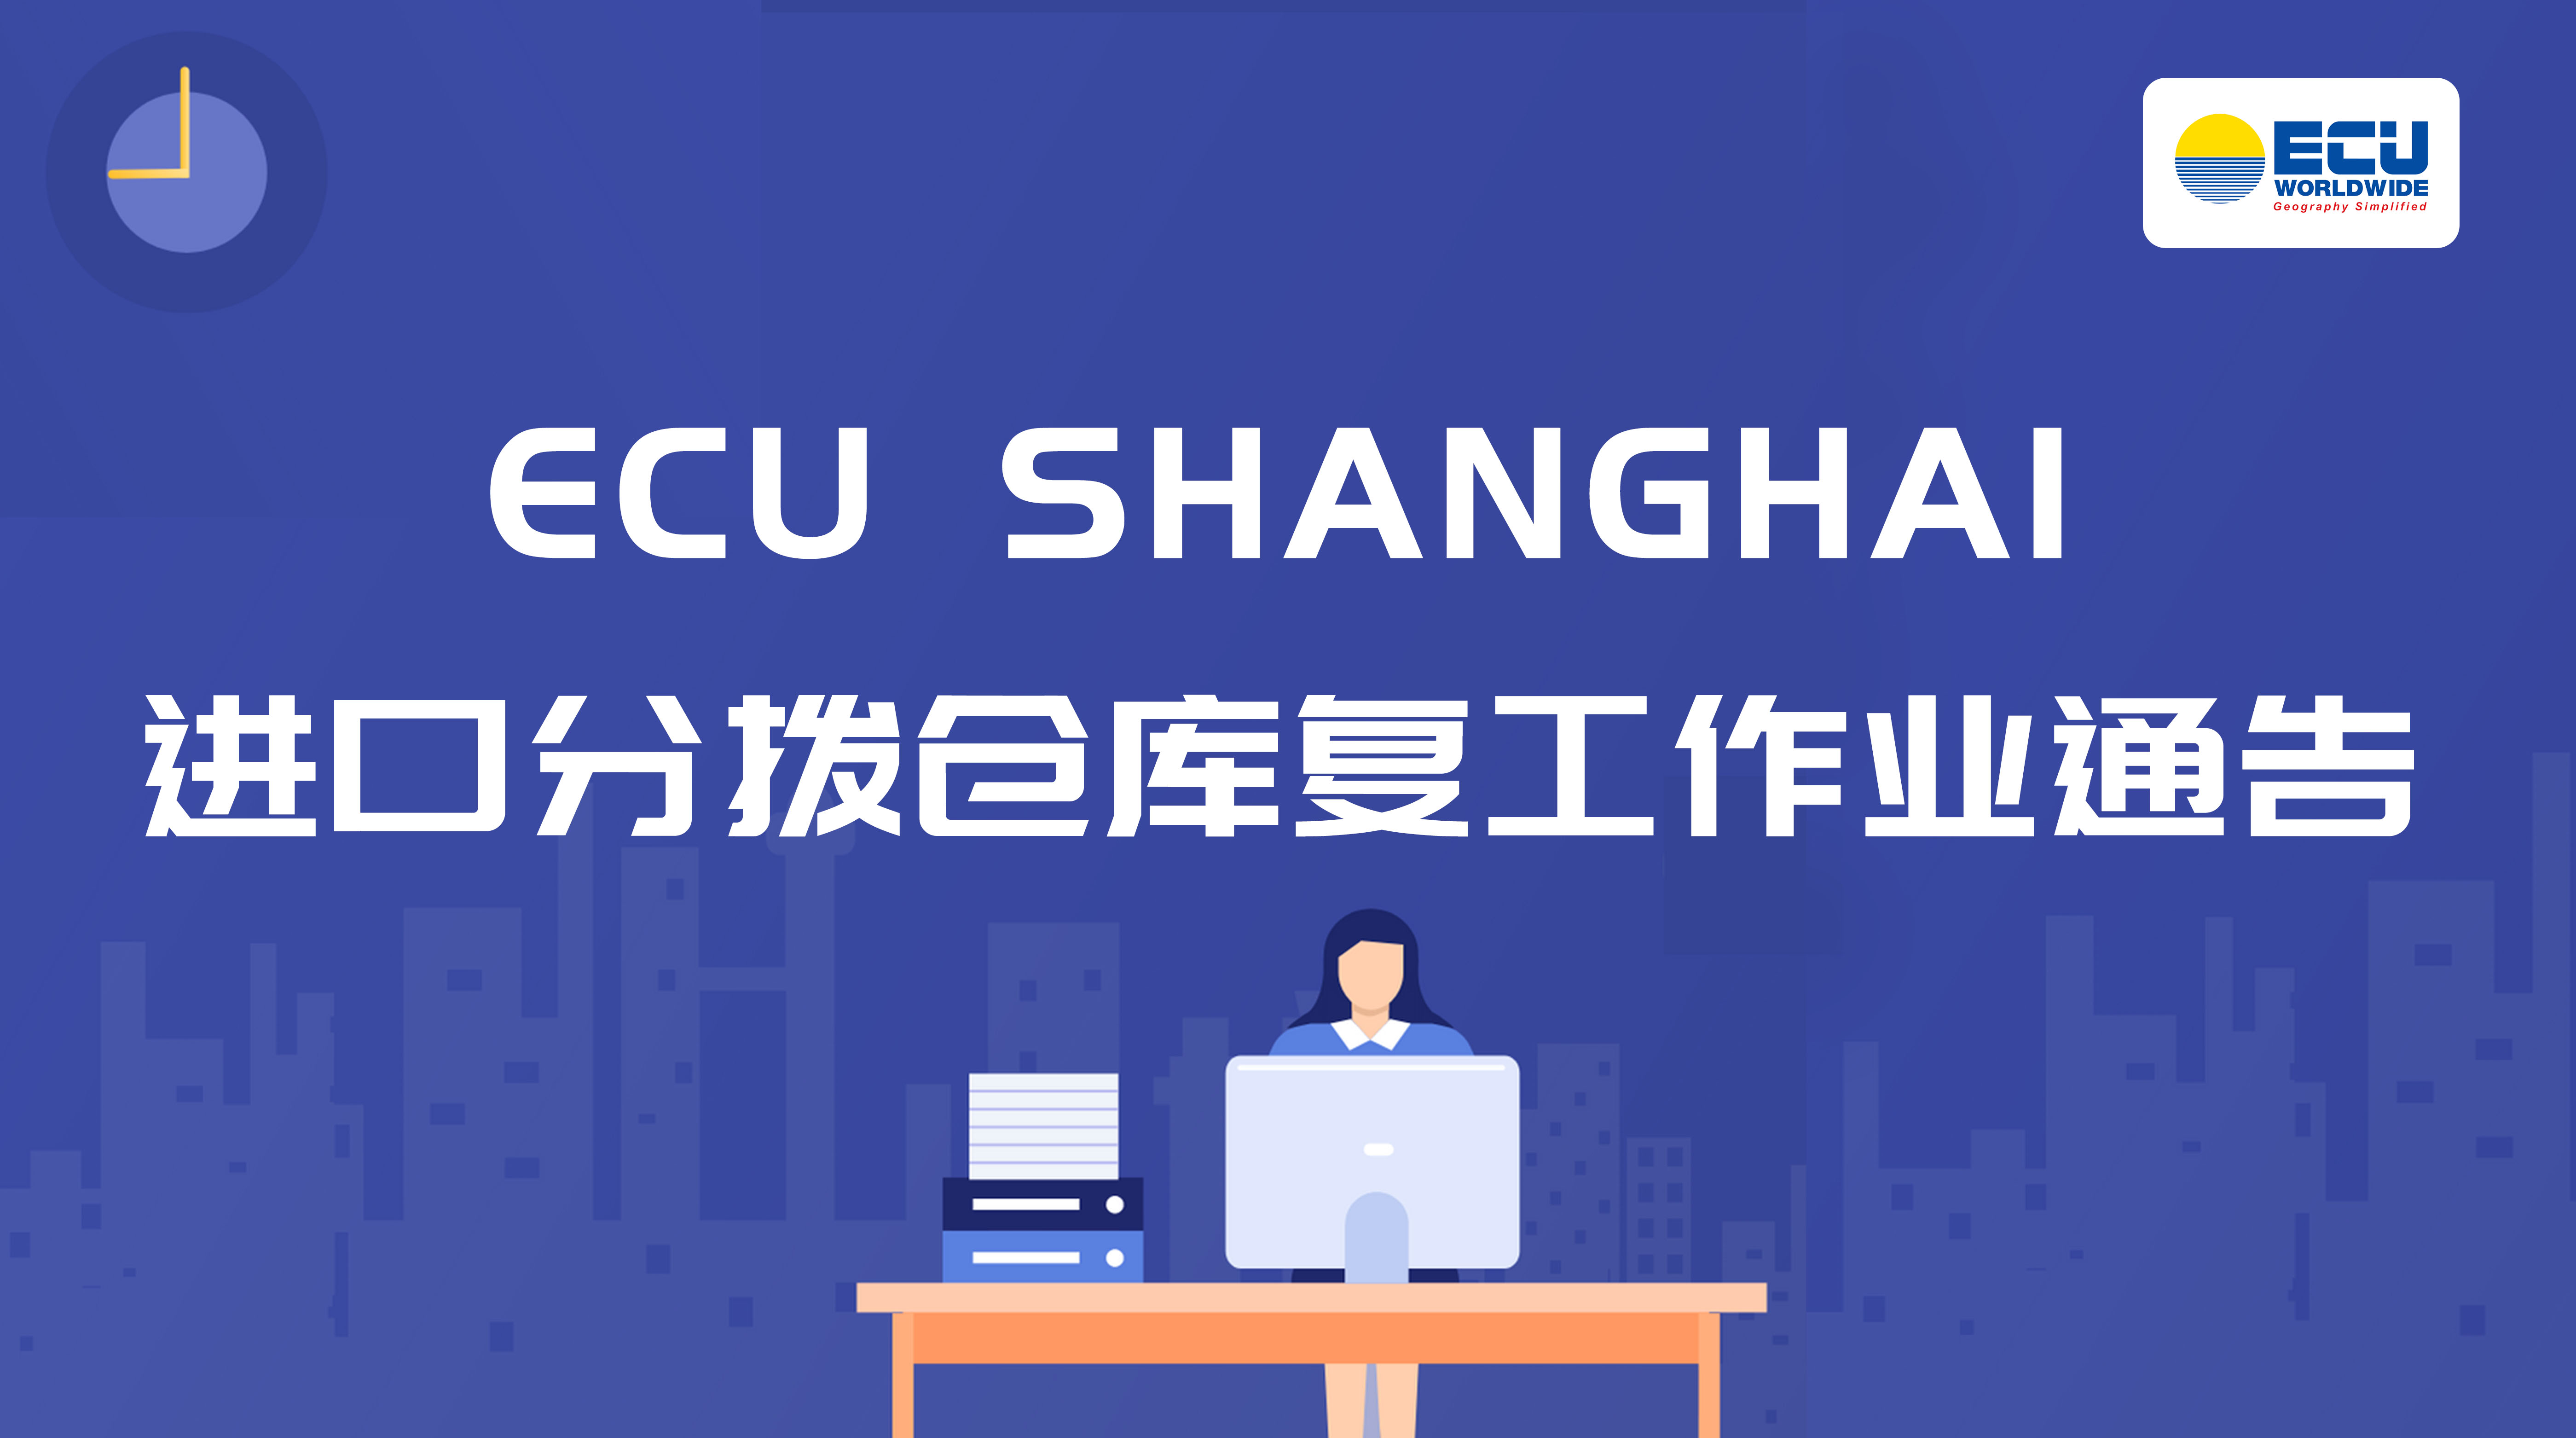 ECU SHANGHAI进口分拨仓库复工作业通告